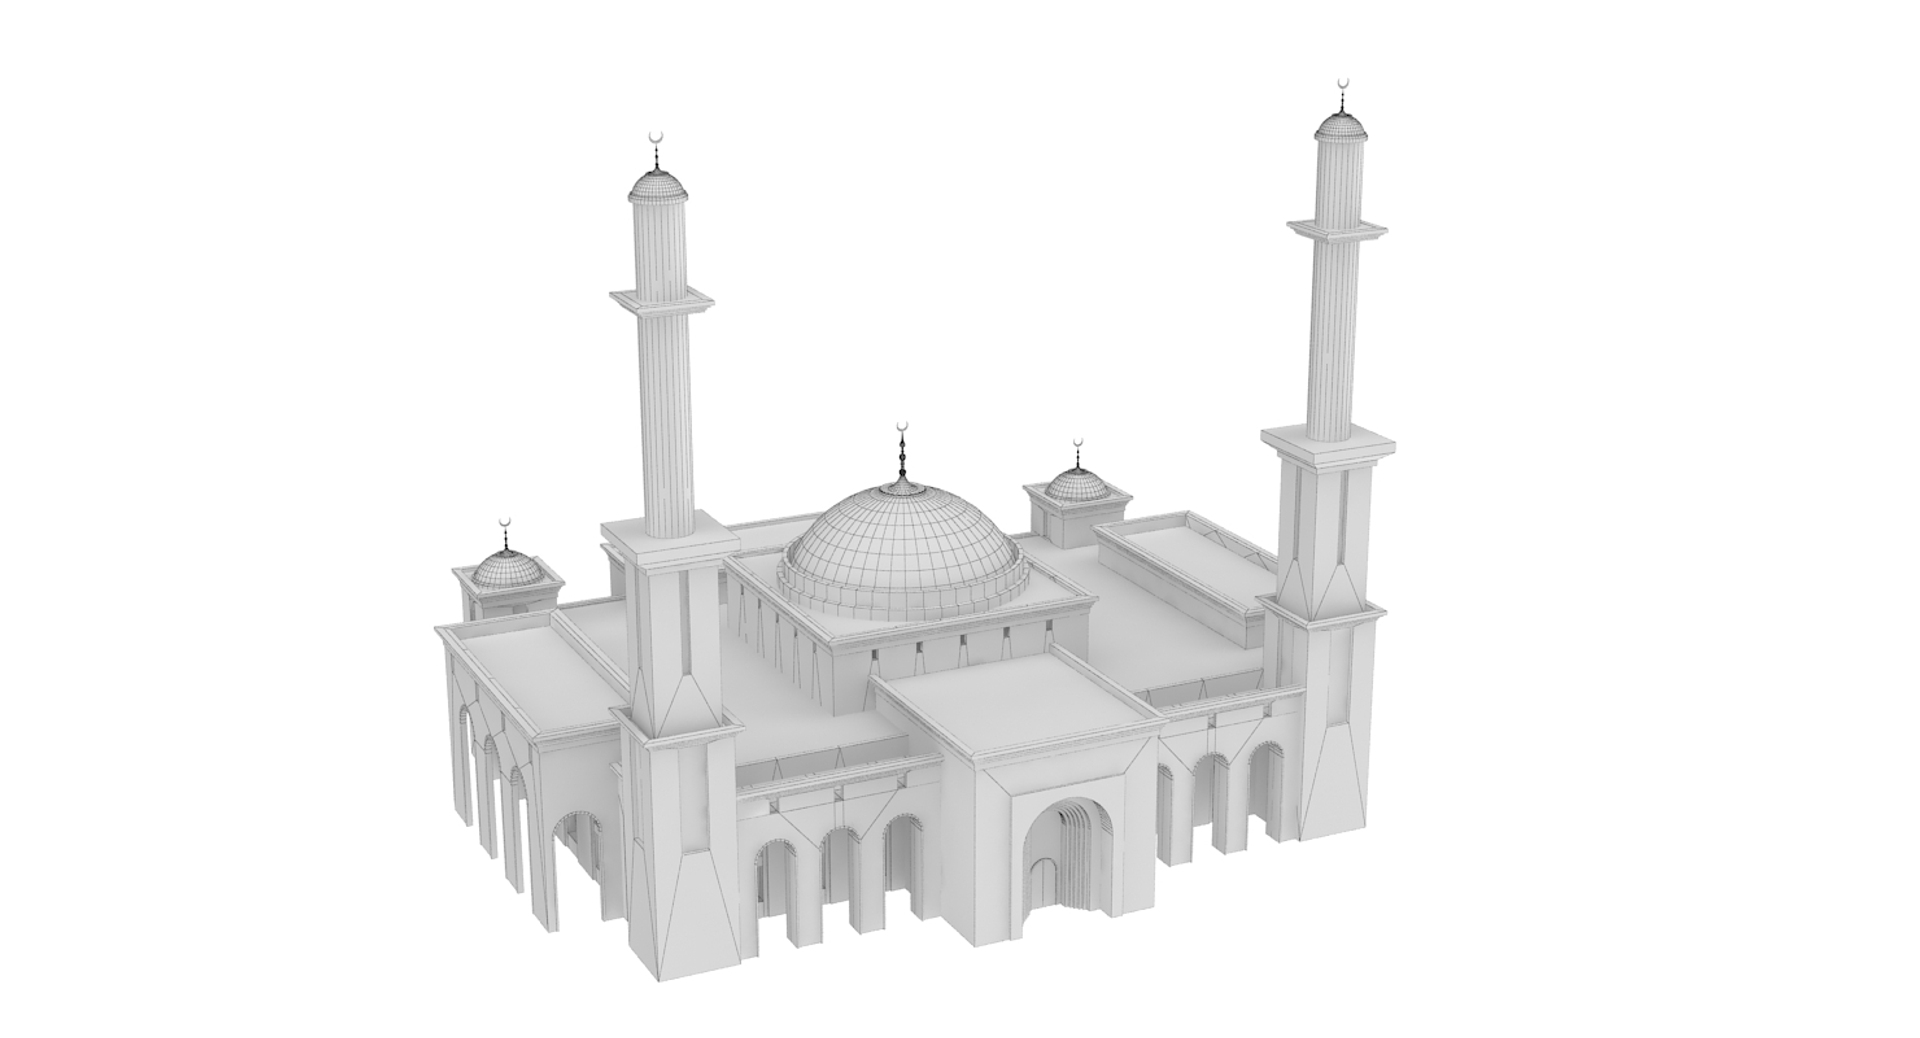 mosque 3D model https://p.turbosquid.com/ts-thumb/Gk/IHVyYr/Mqd7mSDk/mosque_a_fr_set/jpg/1494022472/1920x1080/turn_fit_q99/81212781ad14bfcdea5839c5efb13f9ecebc4d3f/mosque_a_fr_set-1.jpg